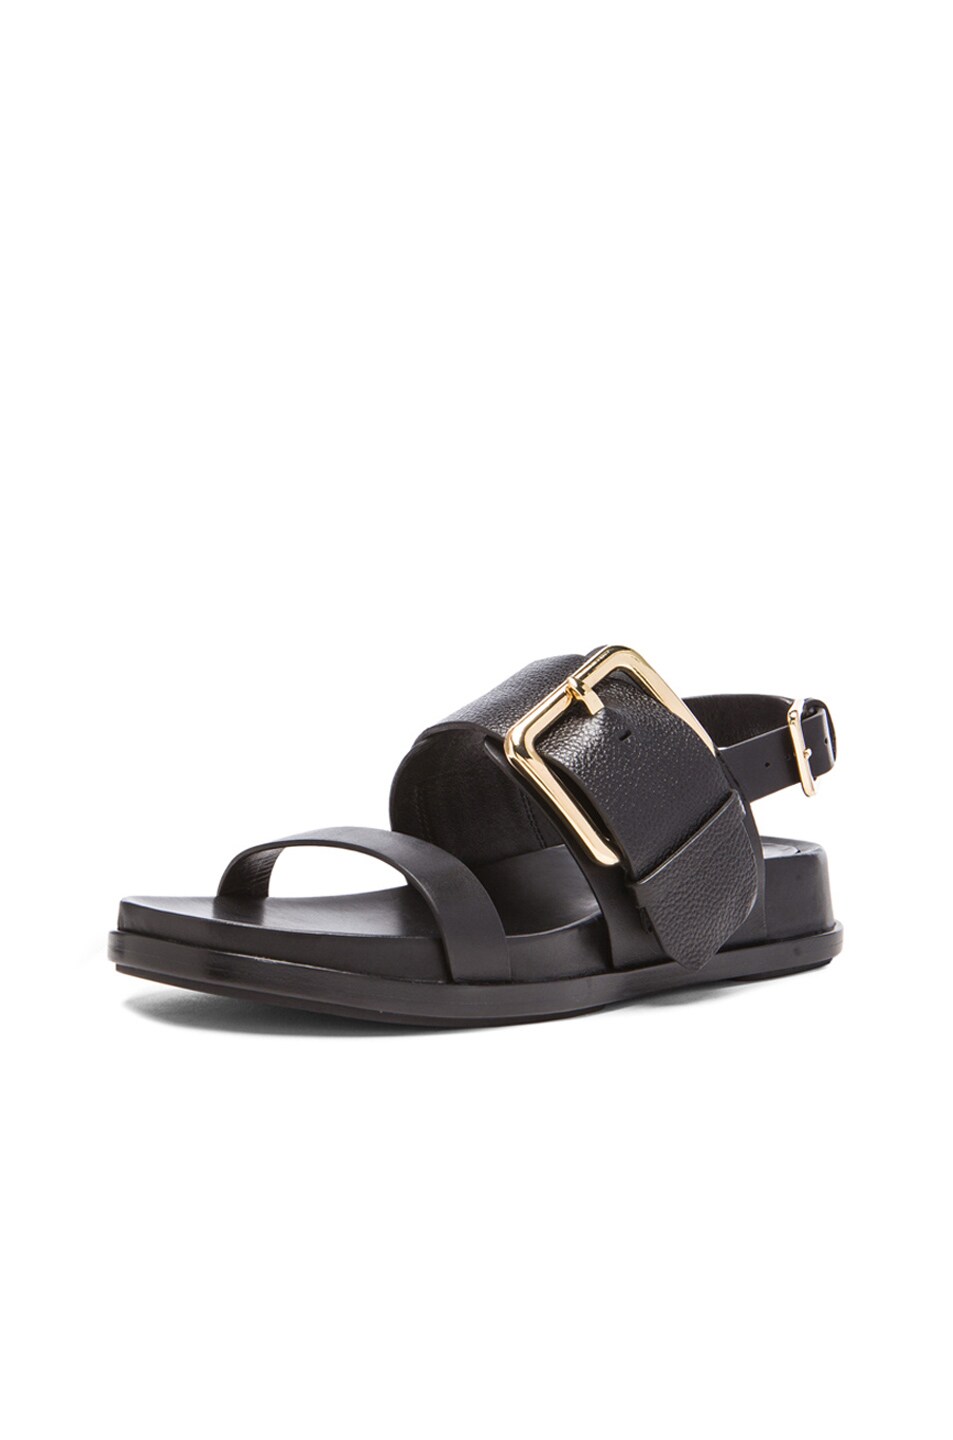 Sigerson Morrison Solar Leather Buckle Sandals in Black | FWRD